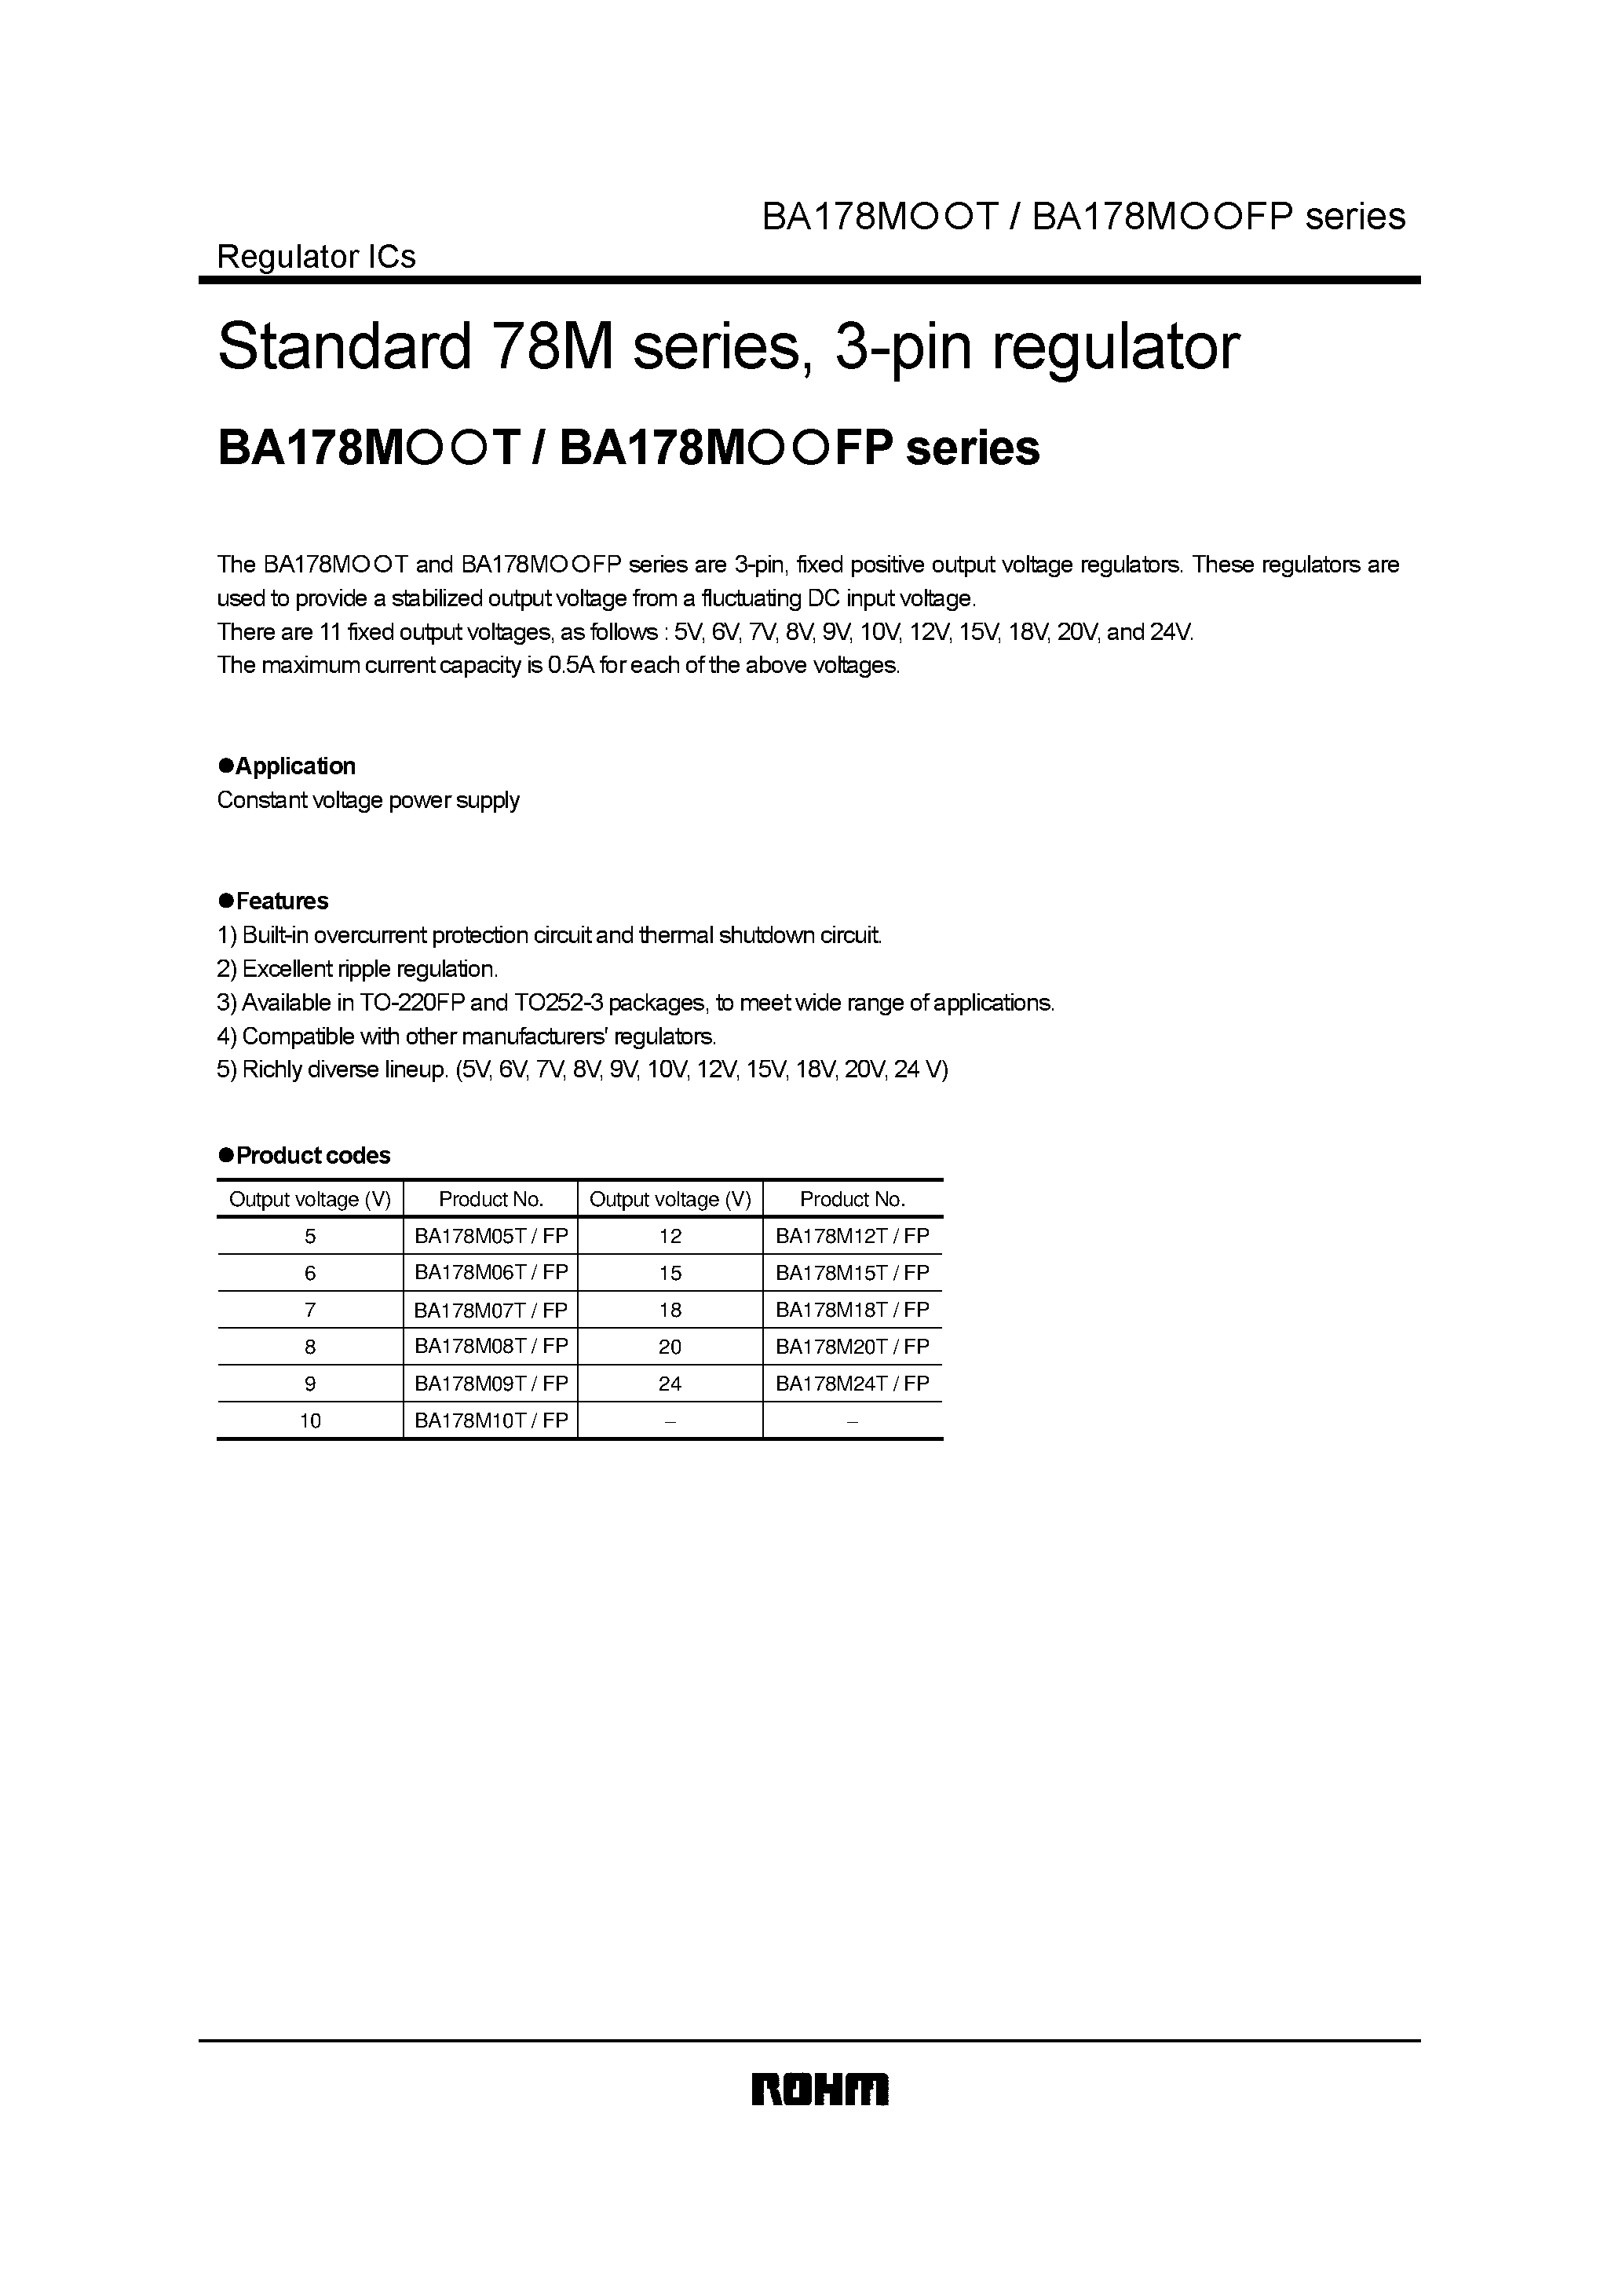 Даташит BA178M07FP - Standard 78M series/ 3-pin regulator страница 1